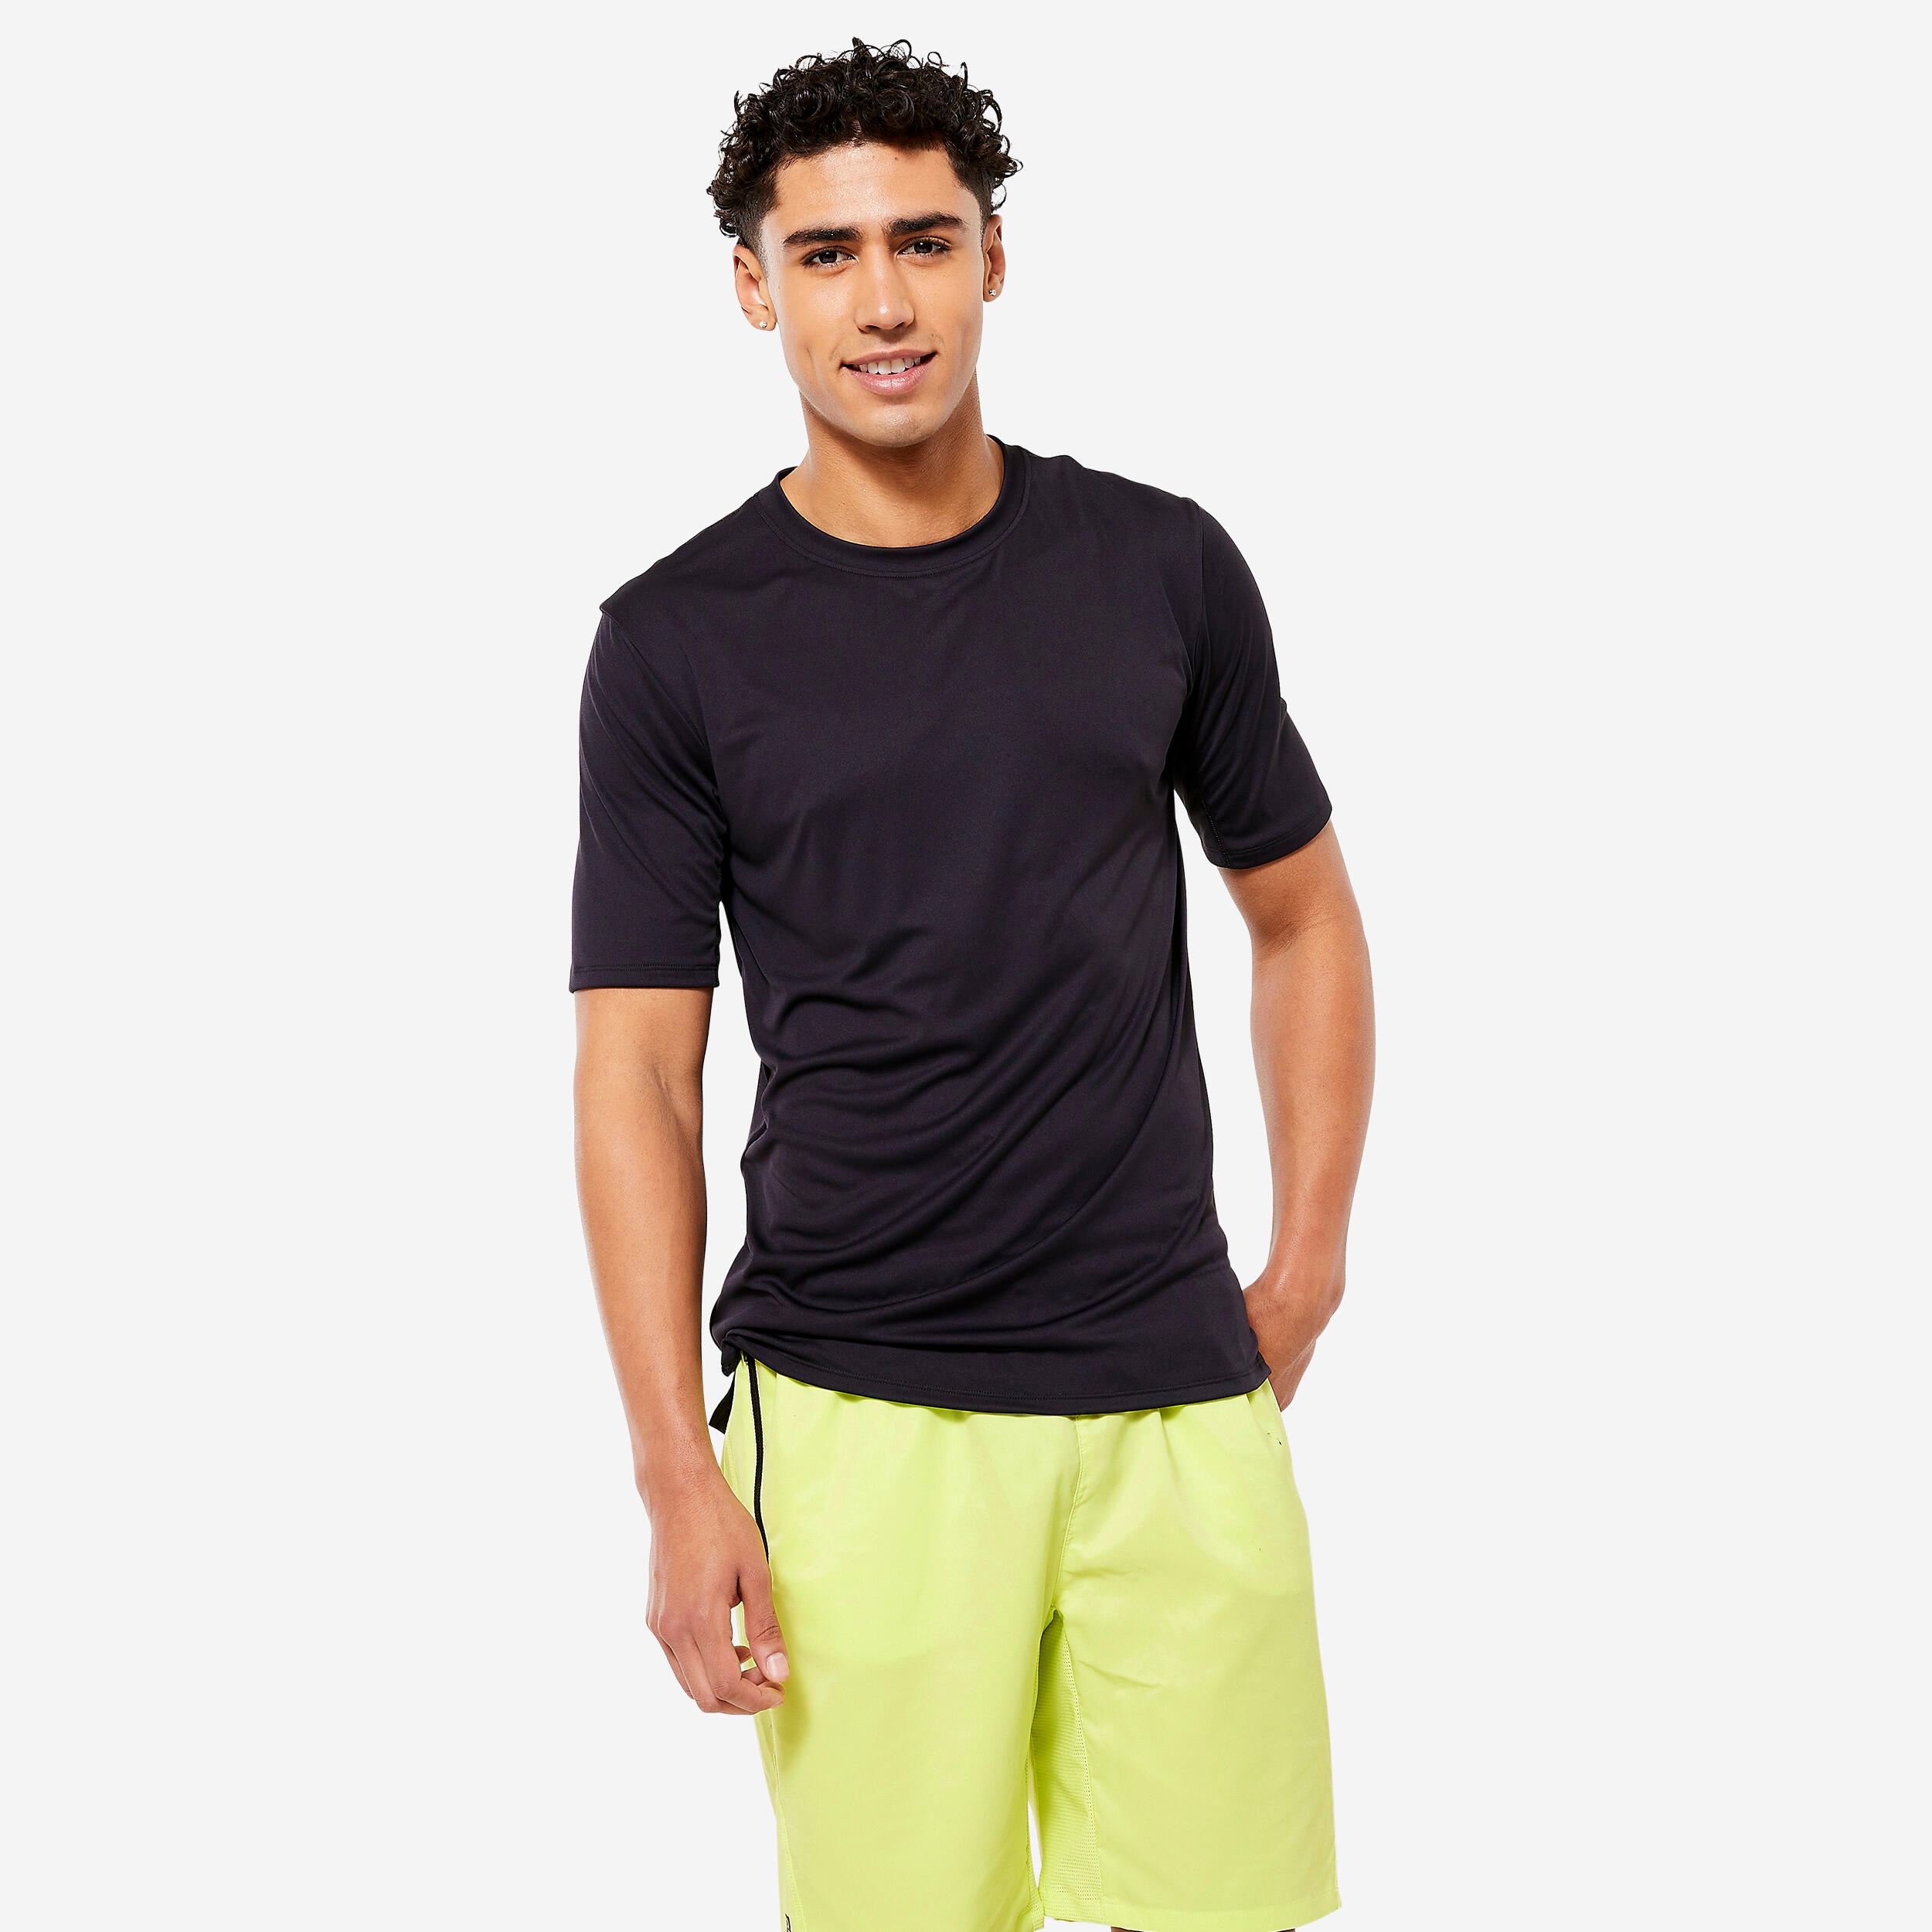 DOMYOS Men's Fitness Breathable Essential Short-Sleeved Crew Neck T-Shirt - Black